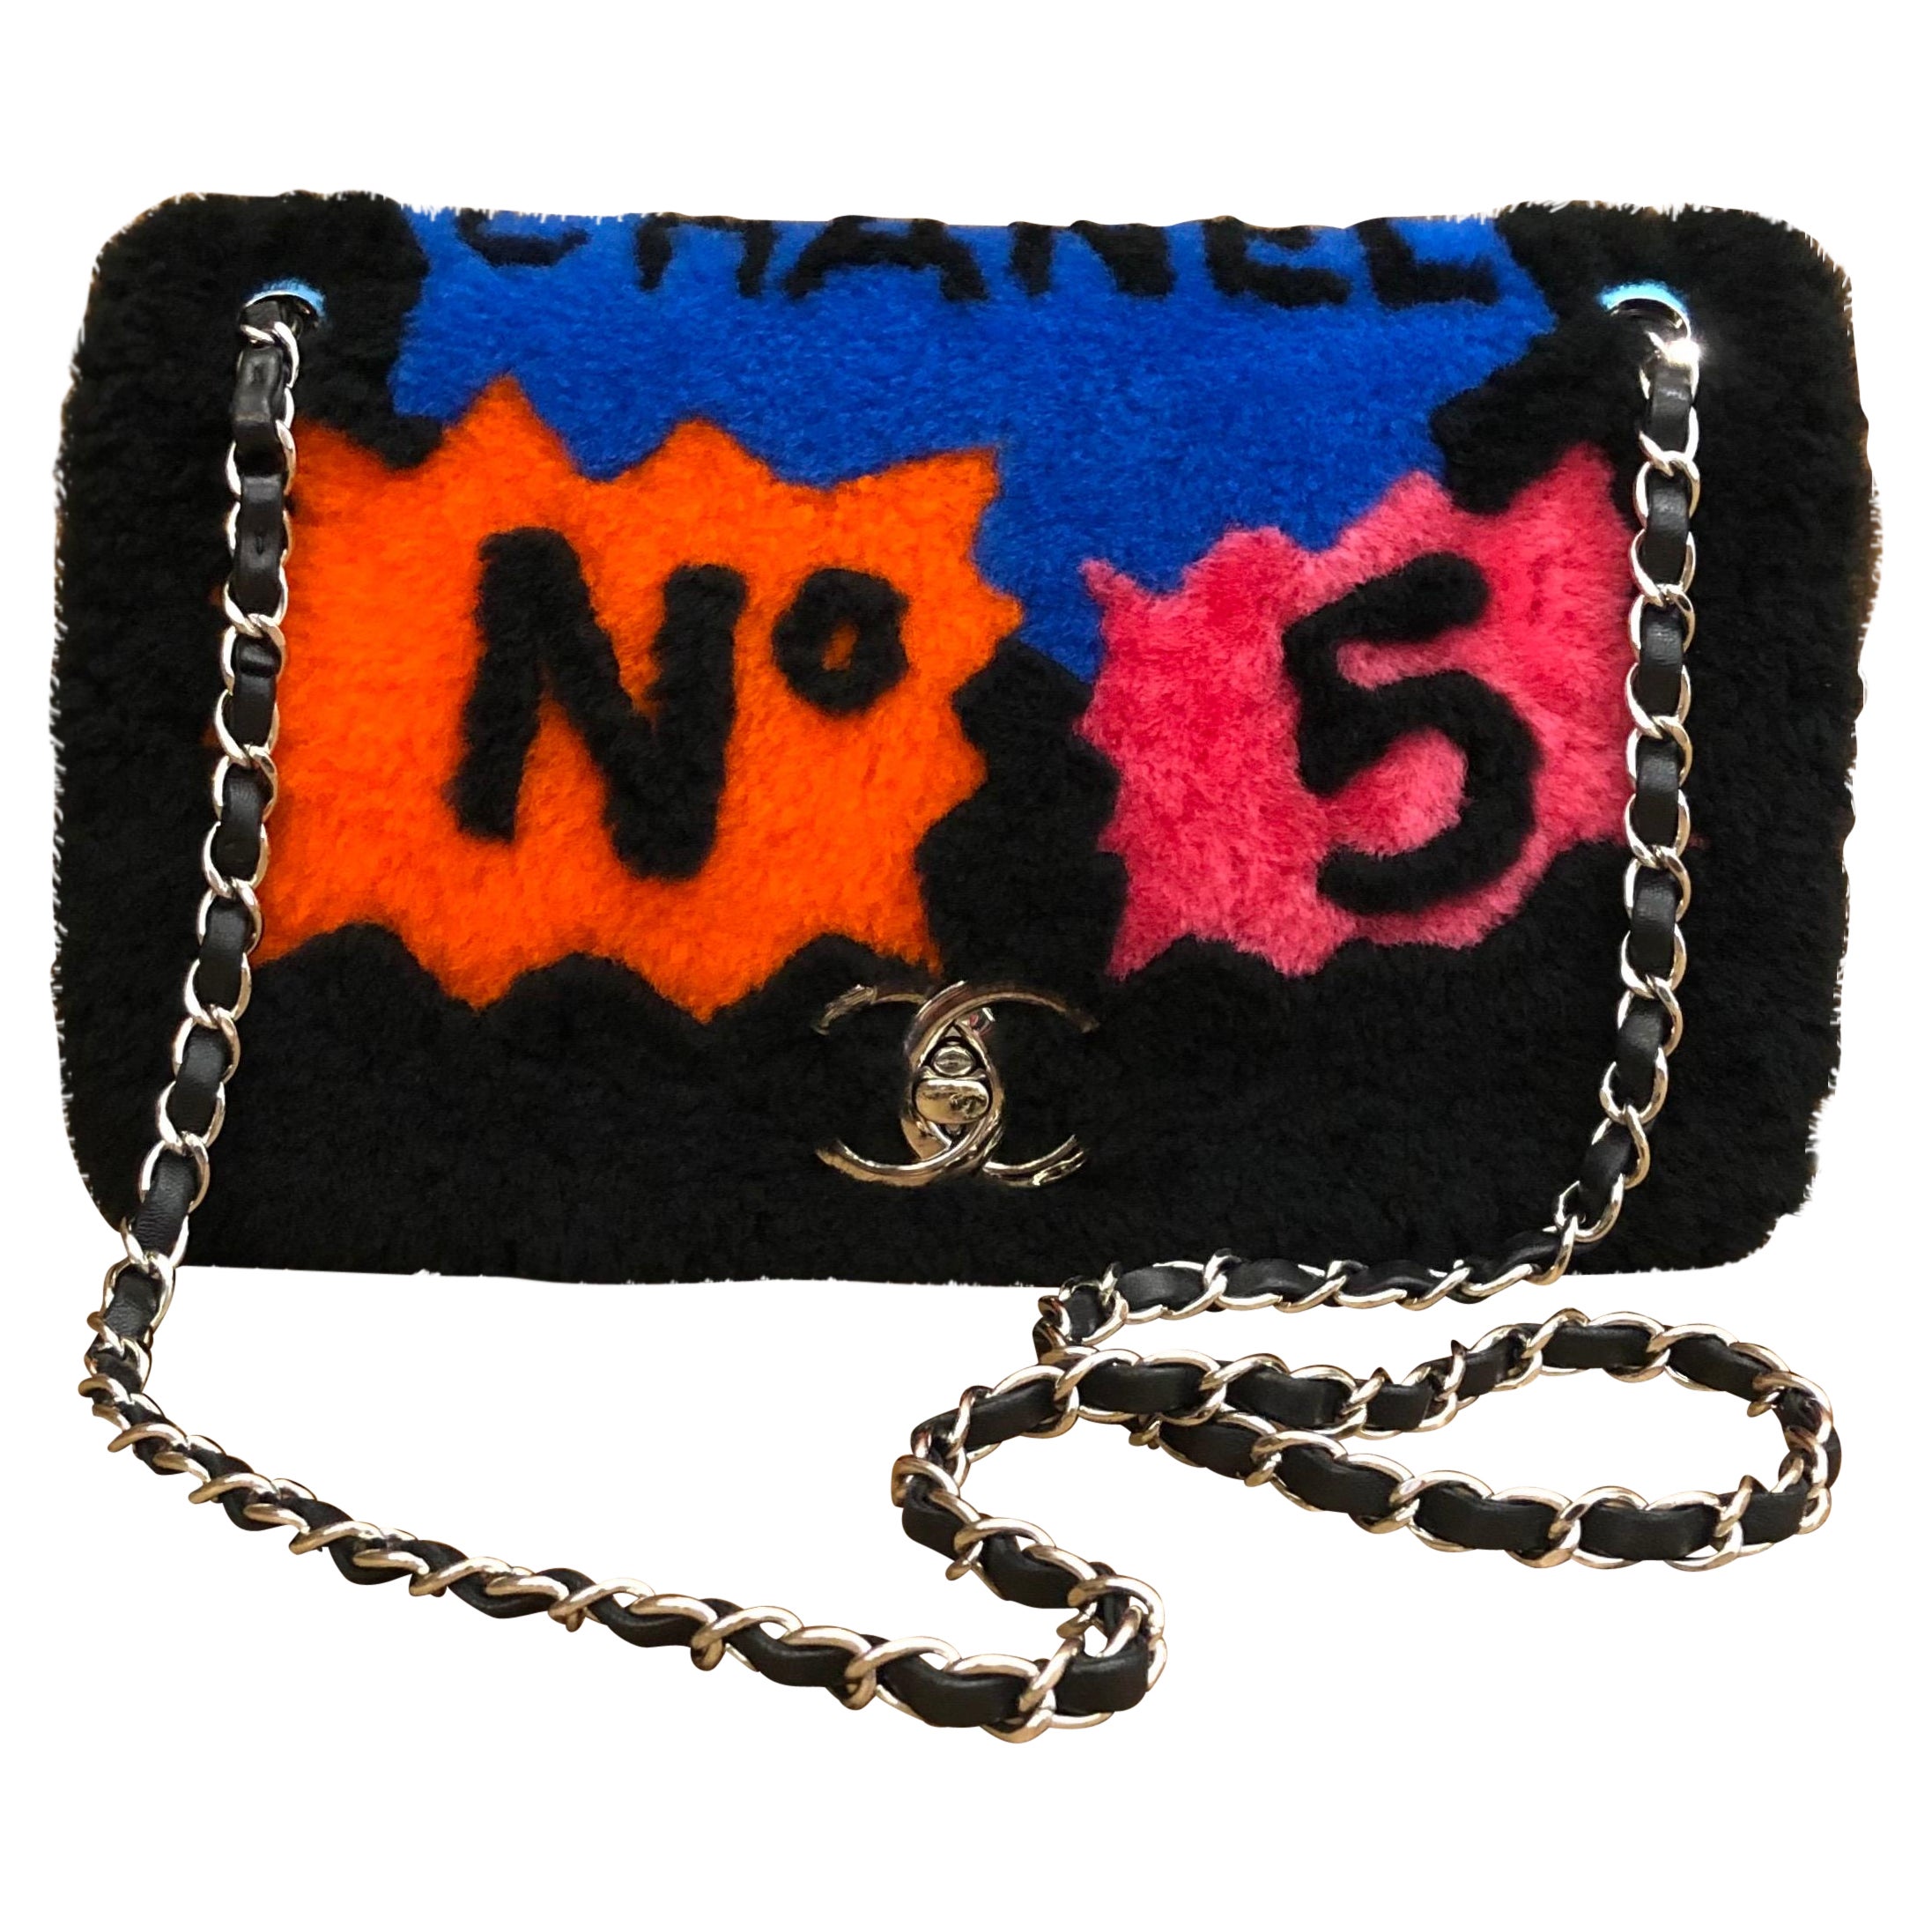 2014 Limited Edition Chanel Shearling Pop Art No. 5 Flap Bag